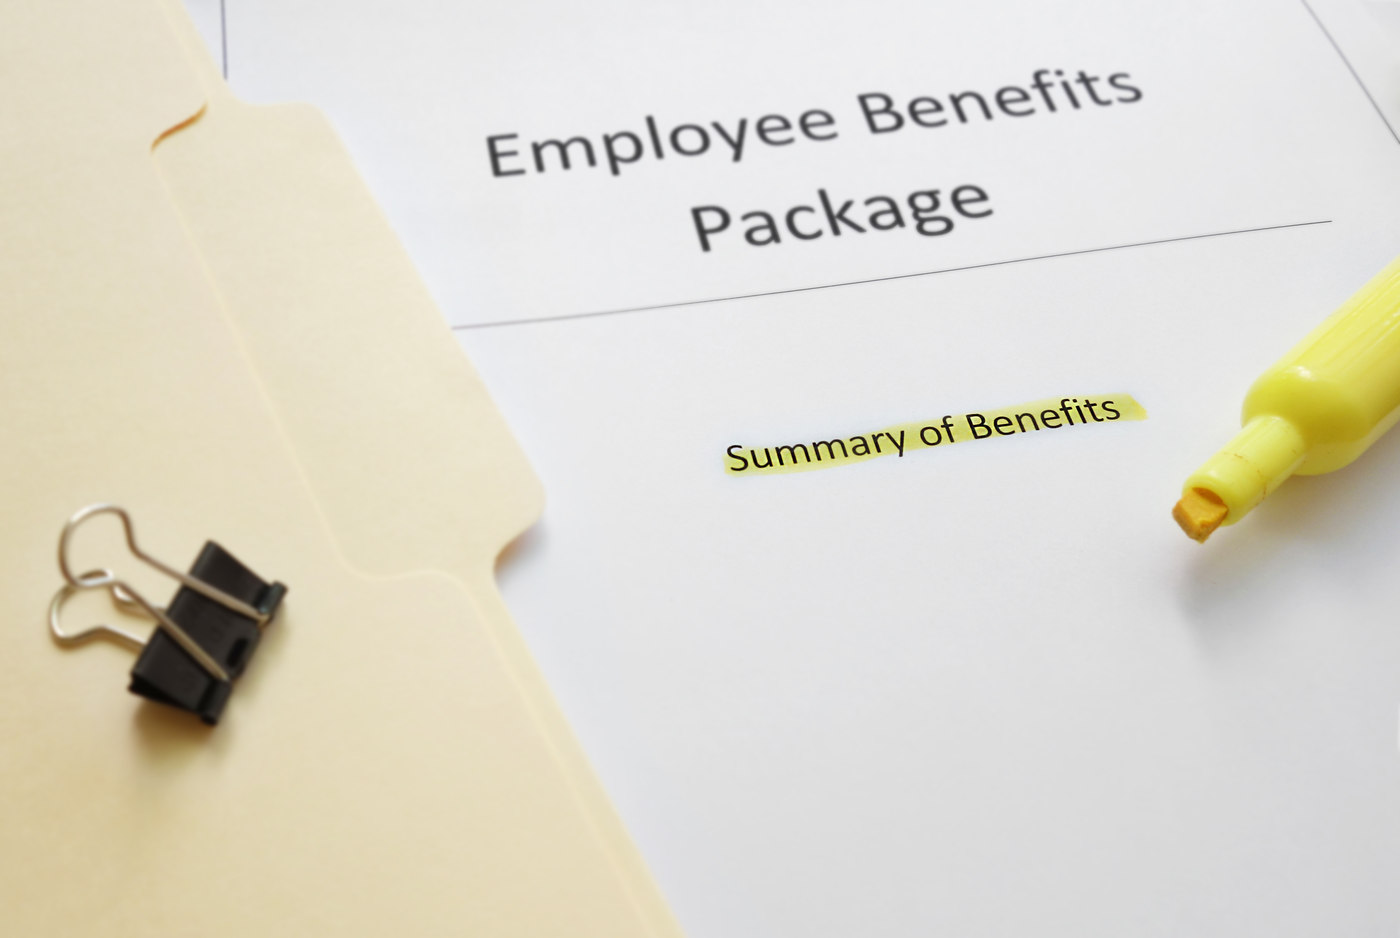 Employee Benefits Plan Image